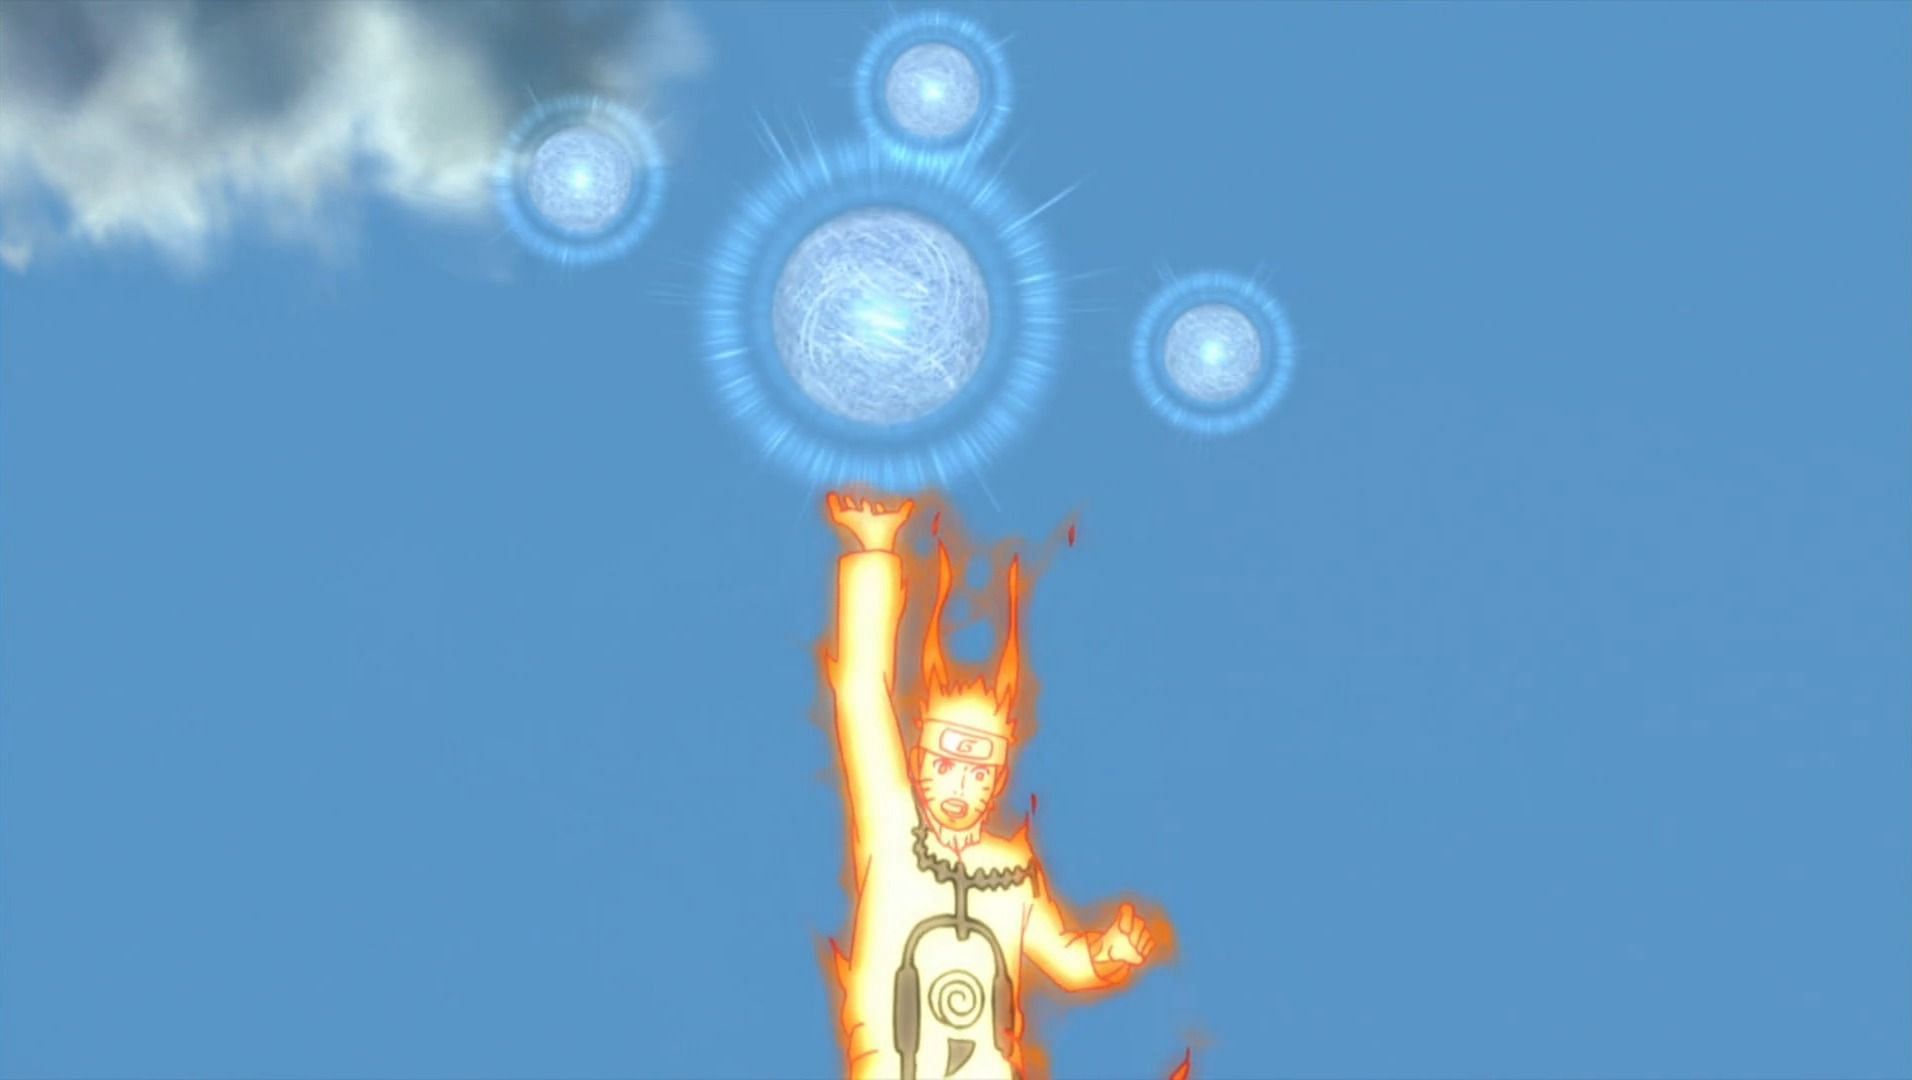 Naruto Uzumaki using the Planetary Rasengan as seen in the anime (Image via Studio Pierrot)